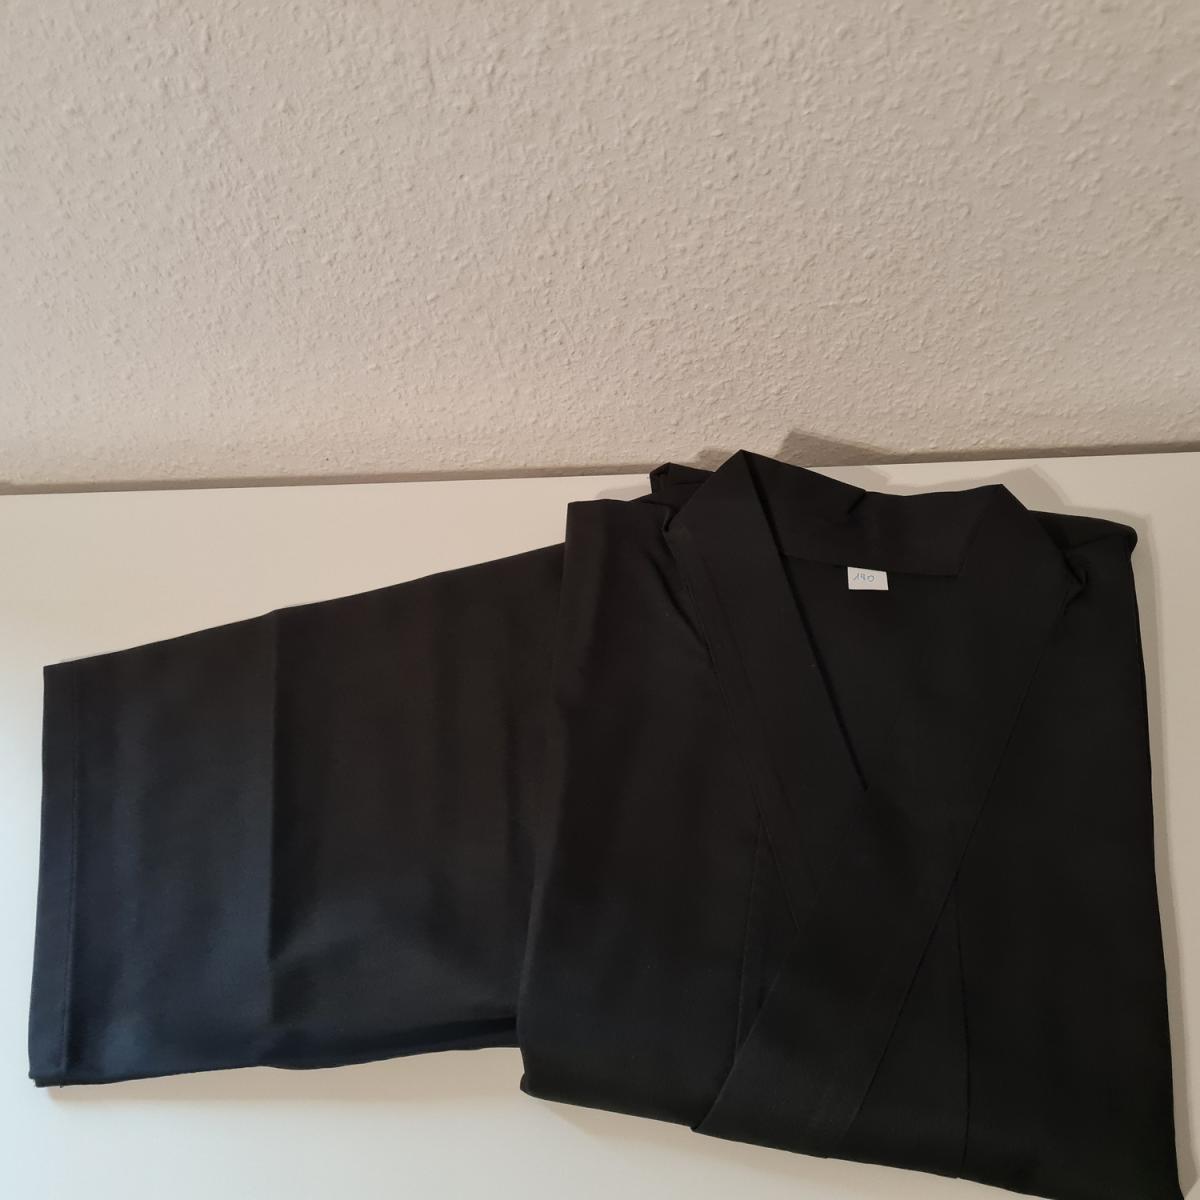 Gi made of cotton - fabric color black - size 180 cm ➤ www.bokken-shop.de. Gi suitable for Iaido, Aikdo, Kendo, Jodo. Your Budo dealer!